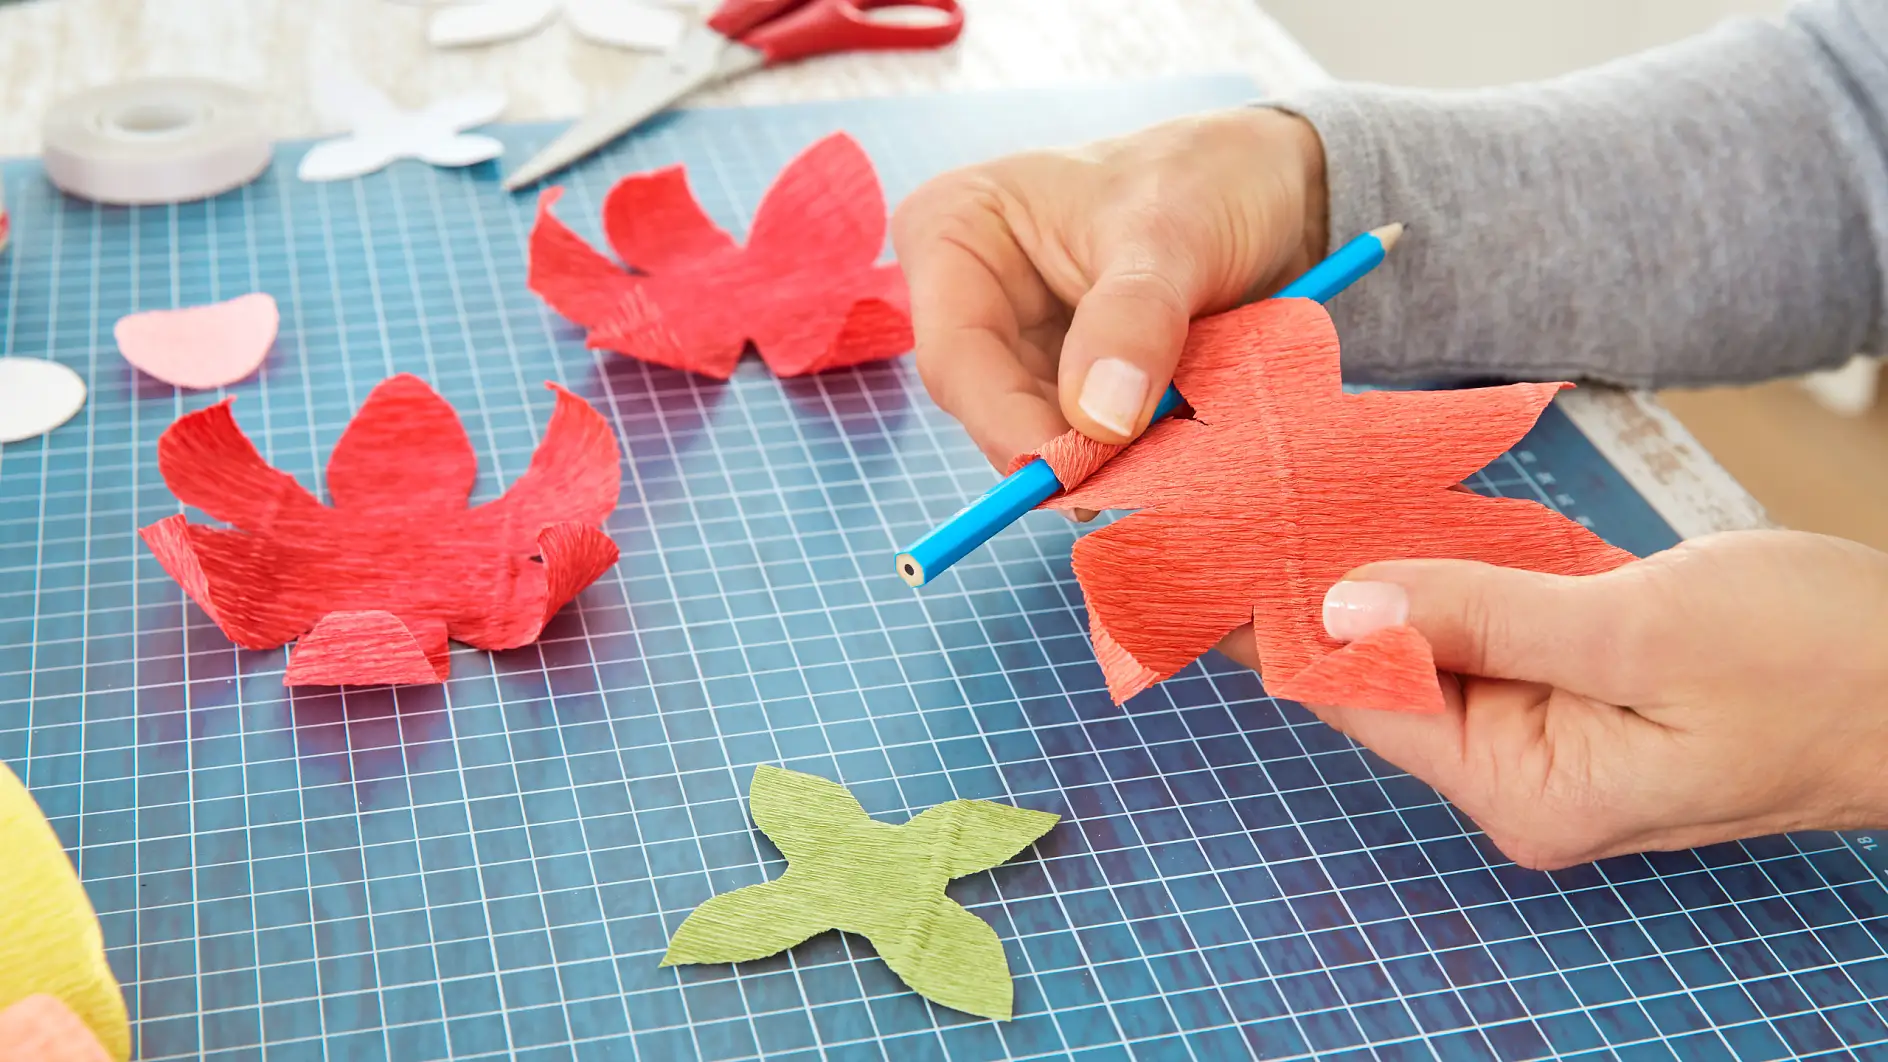 DIY Paper Flower / Step 2: Roll the Petals